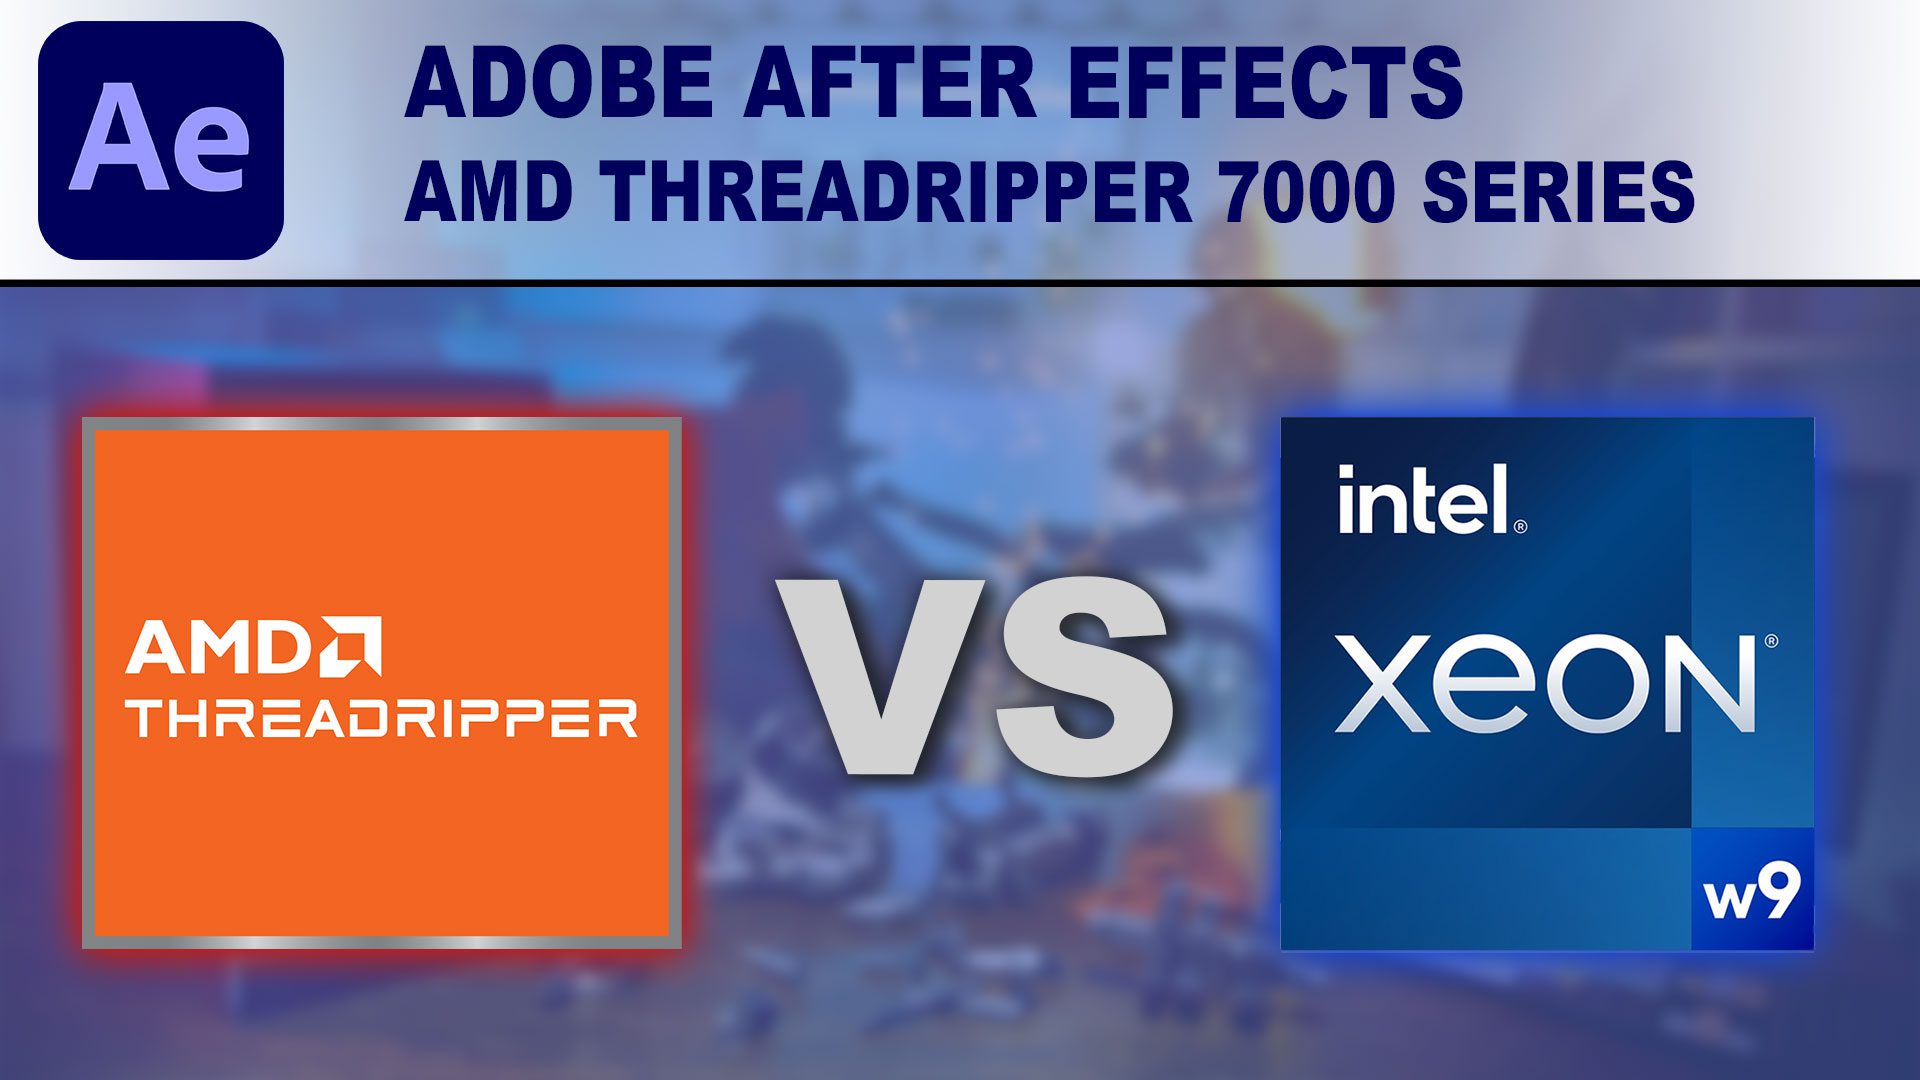 Decorative Image: After Effects - AMD Threadripper vs Intel Xeon